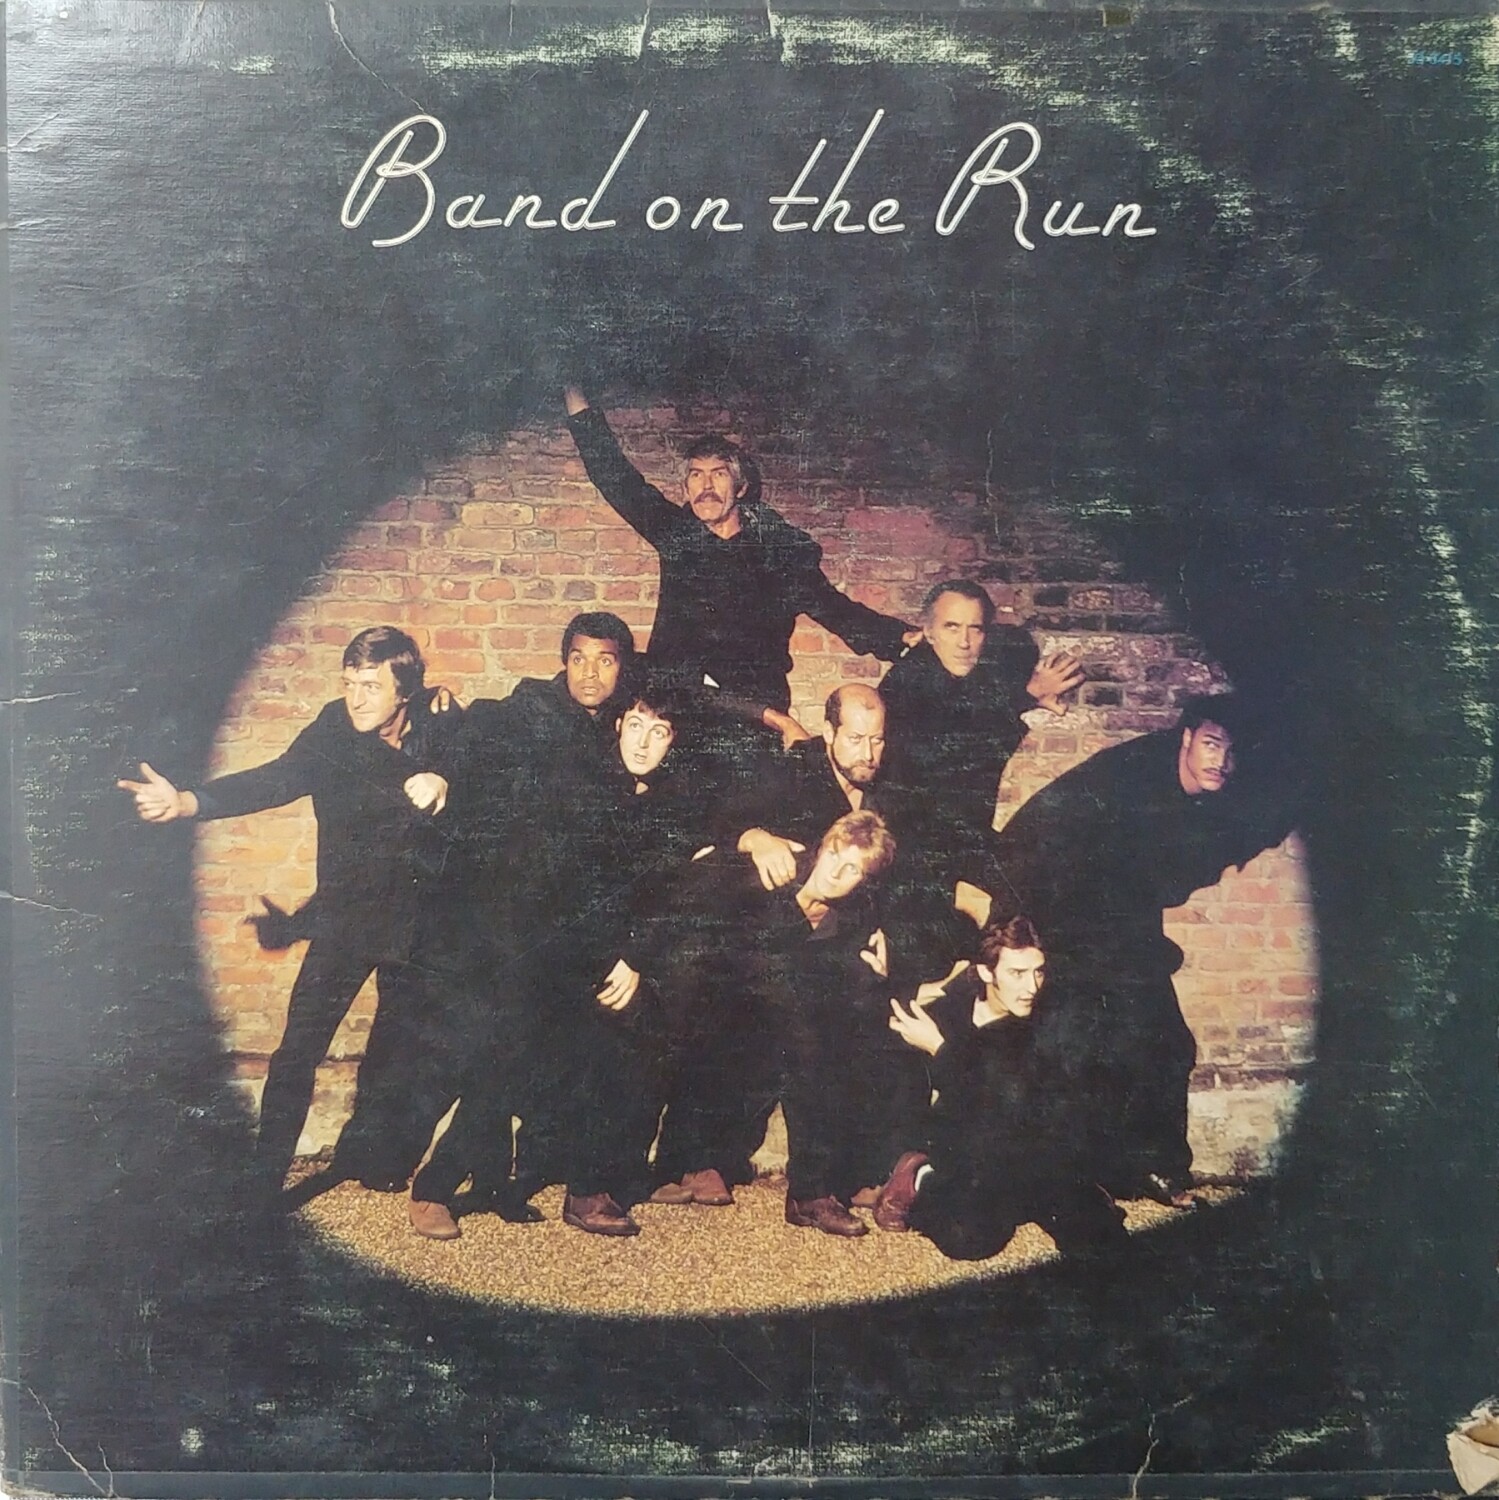 Paul McCartney & The Wings - Band on the run